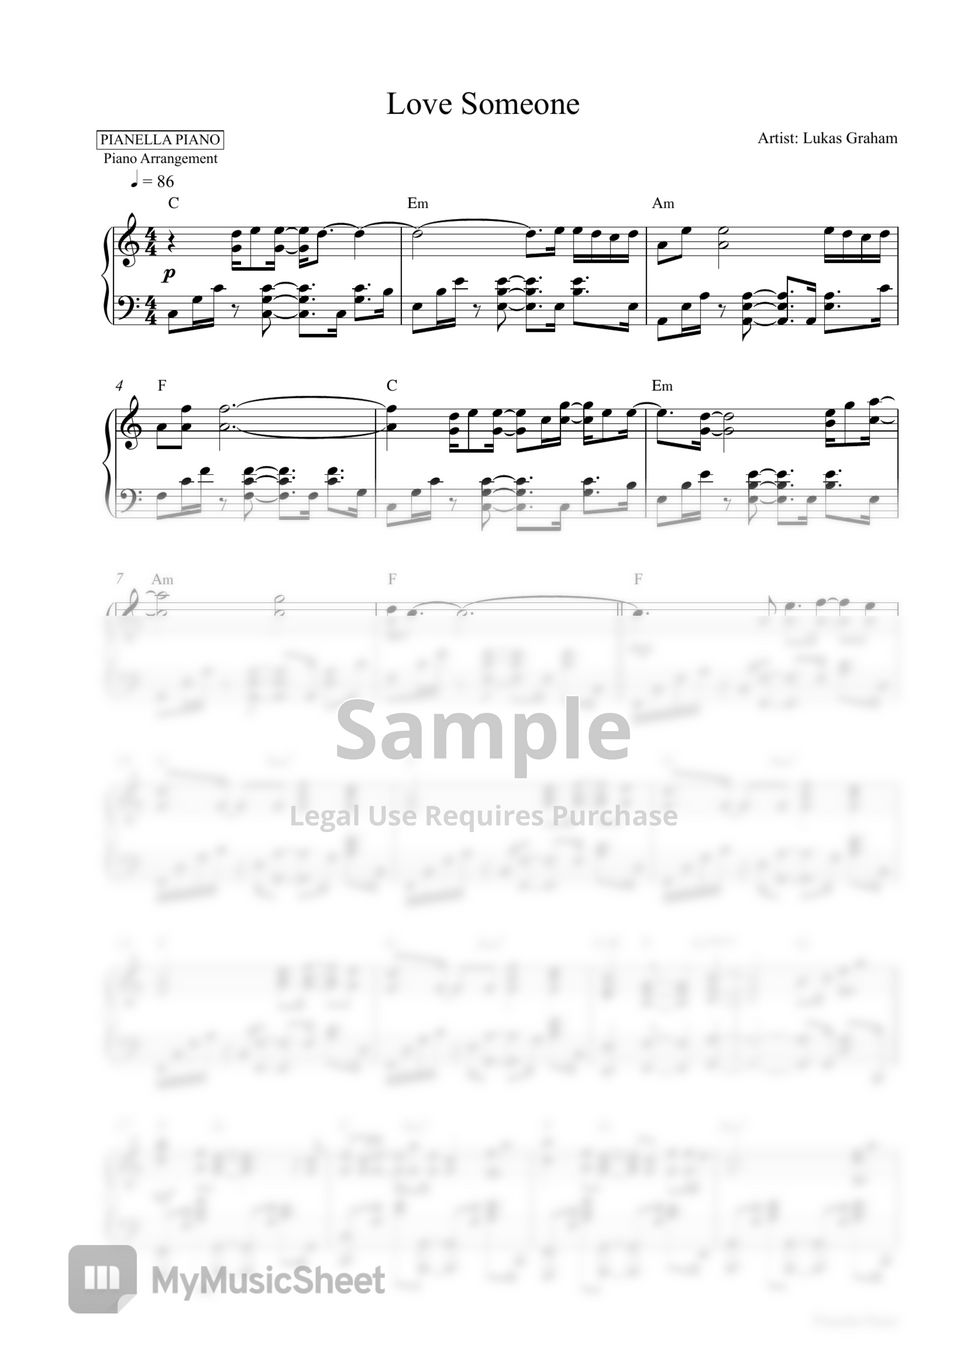 Lukas Graham - Love Someone (Piano Sheet) by Pianella Piano